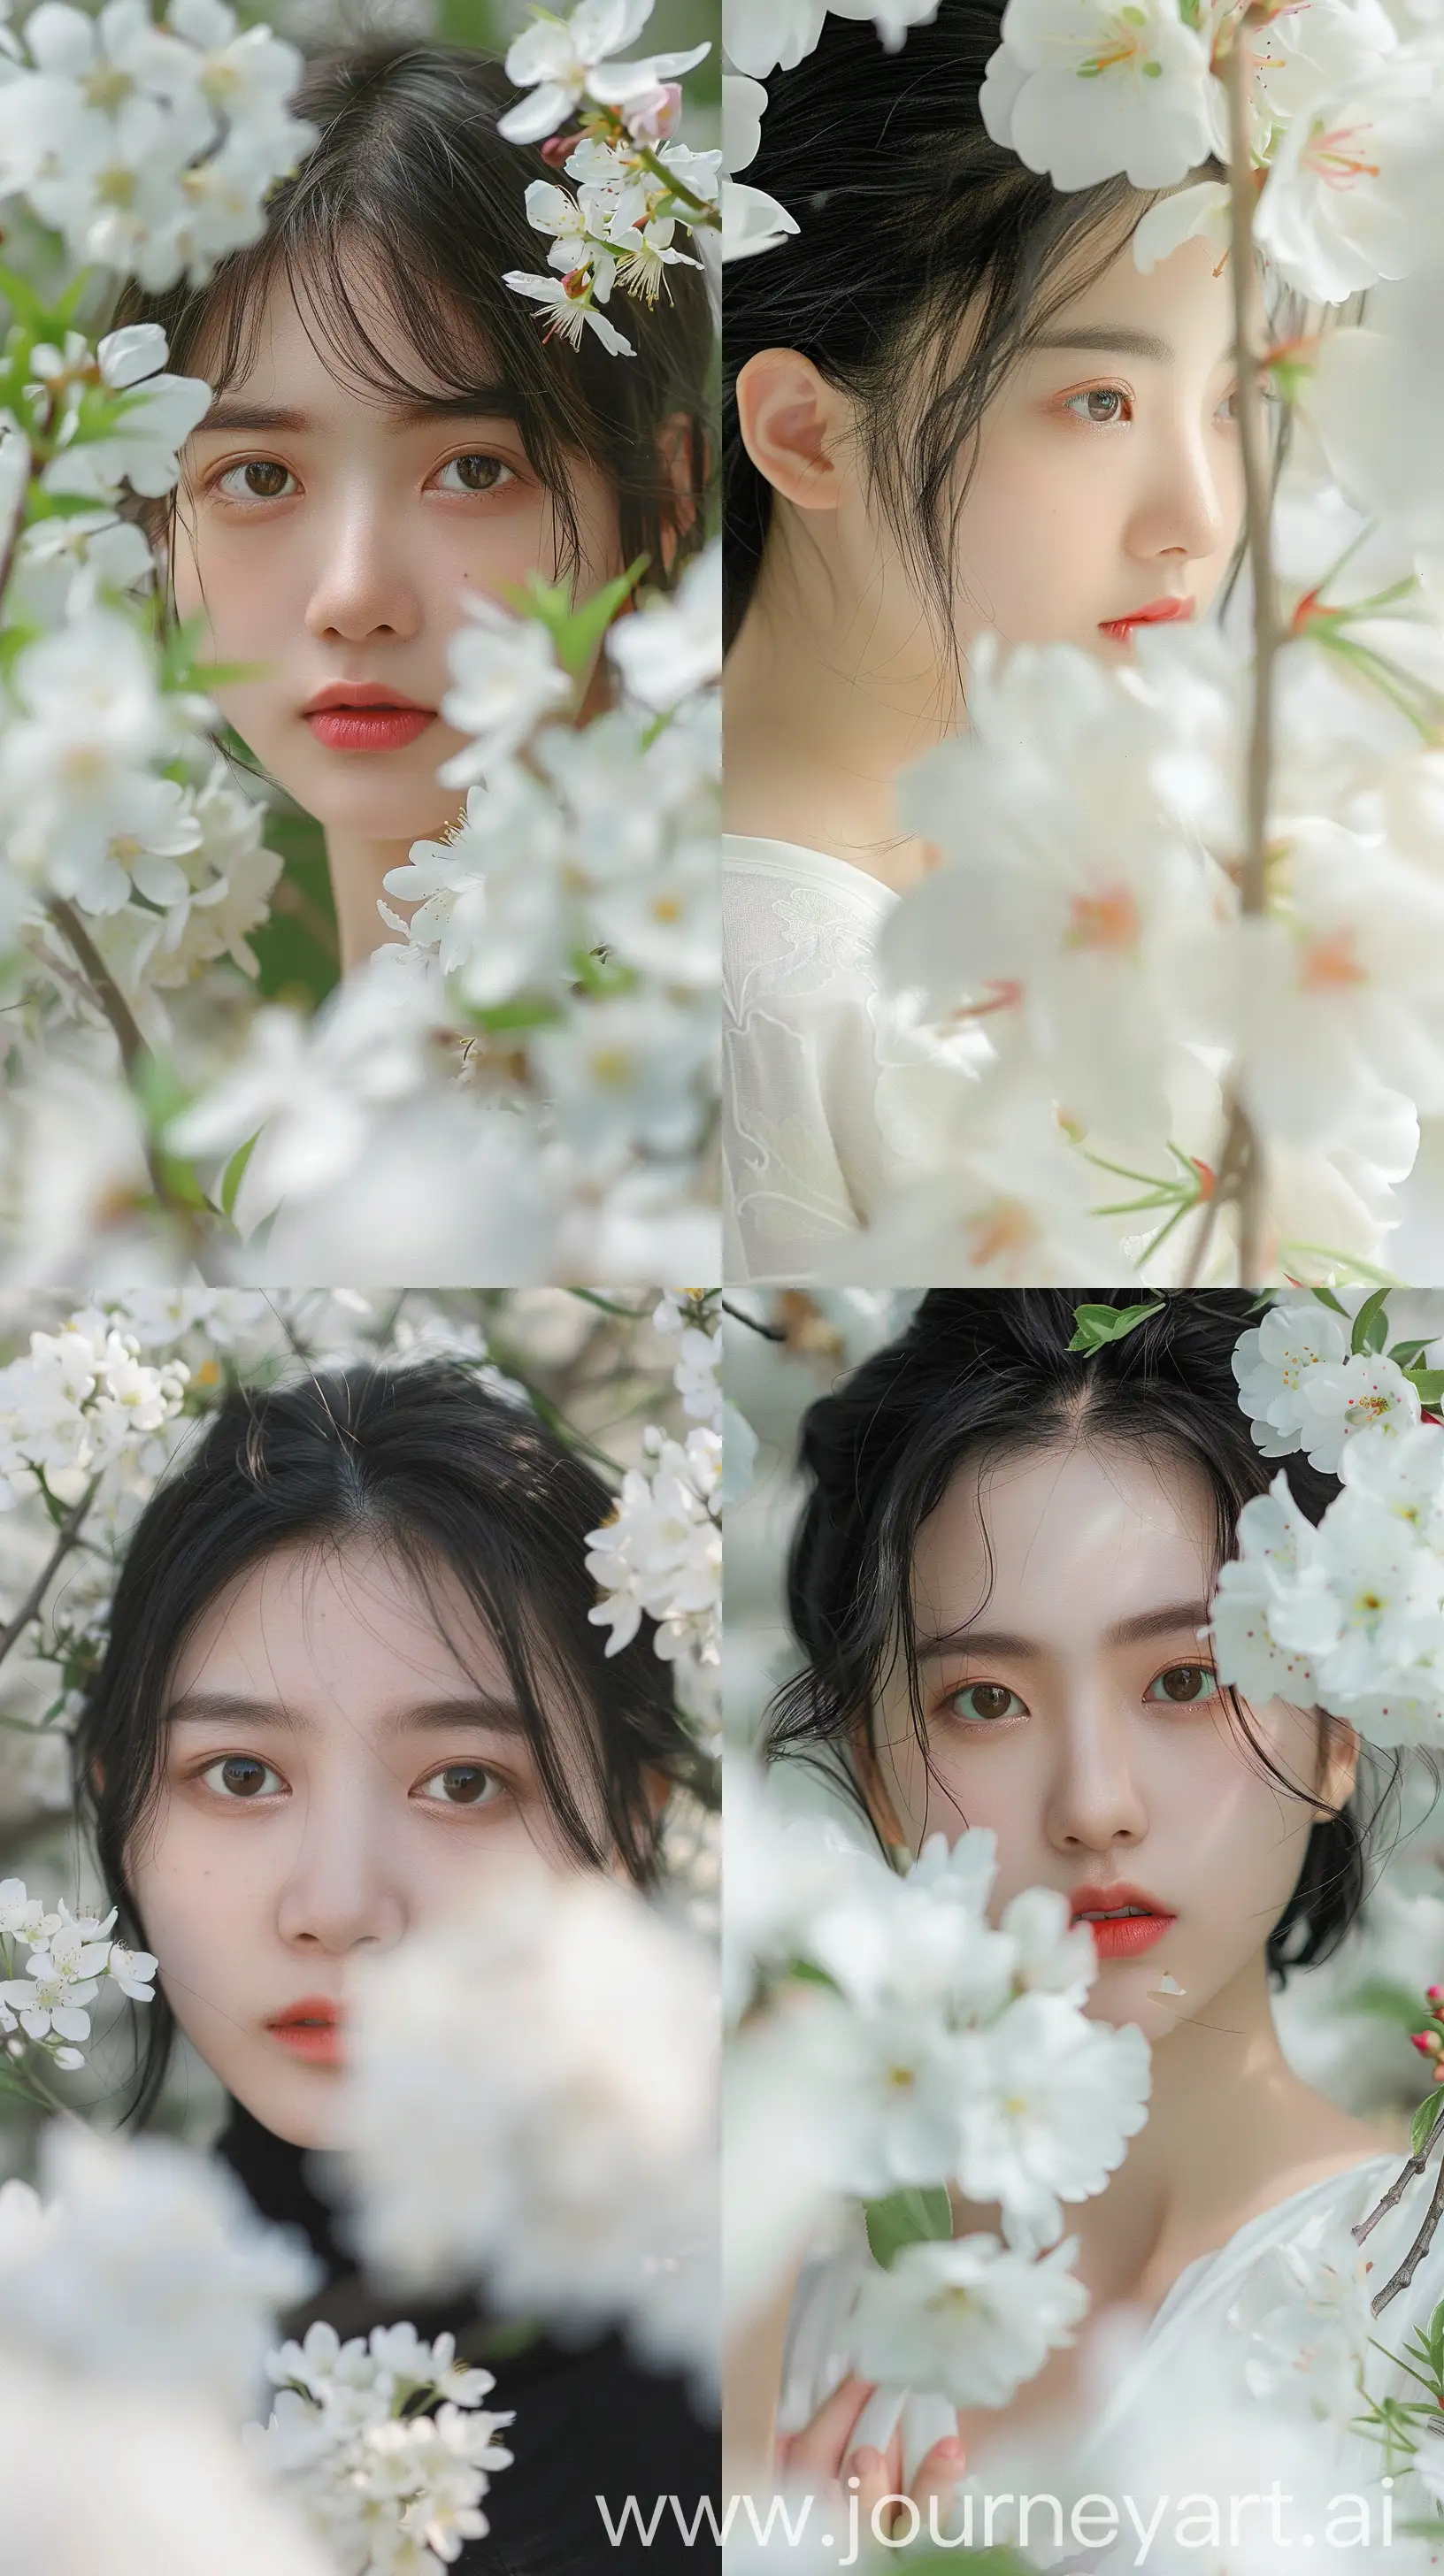 China-Girl-Age-18-Among-White-Flowers-CloseUp-Portrait